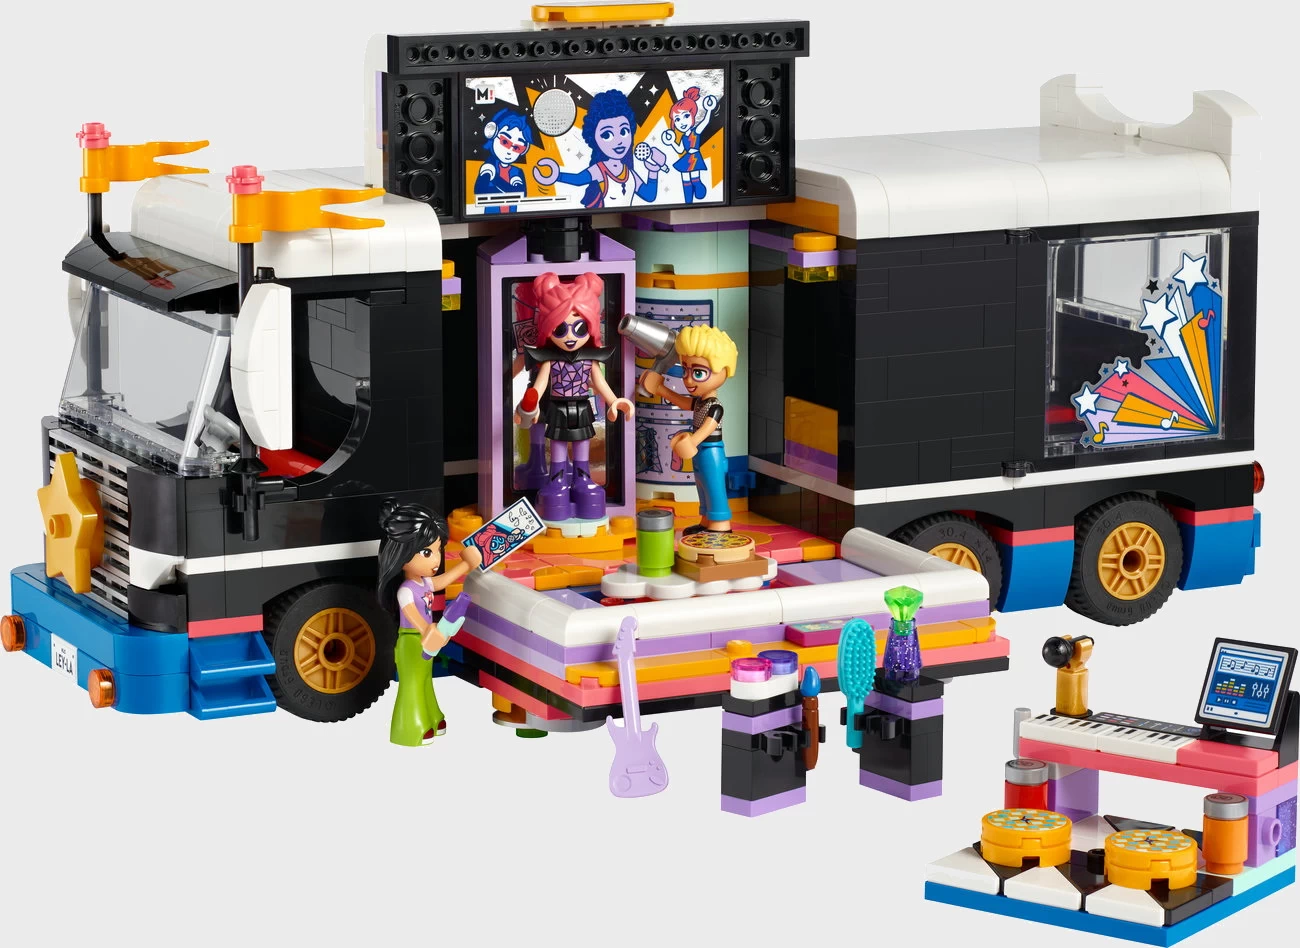 LEGO Friends 42619 - Popstar Tourbus